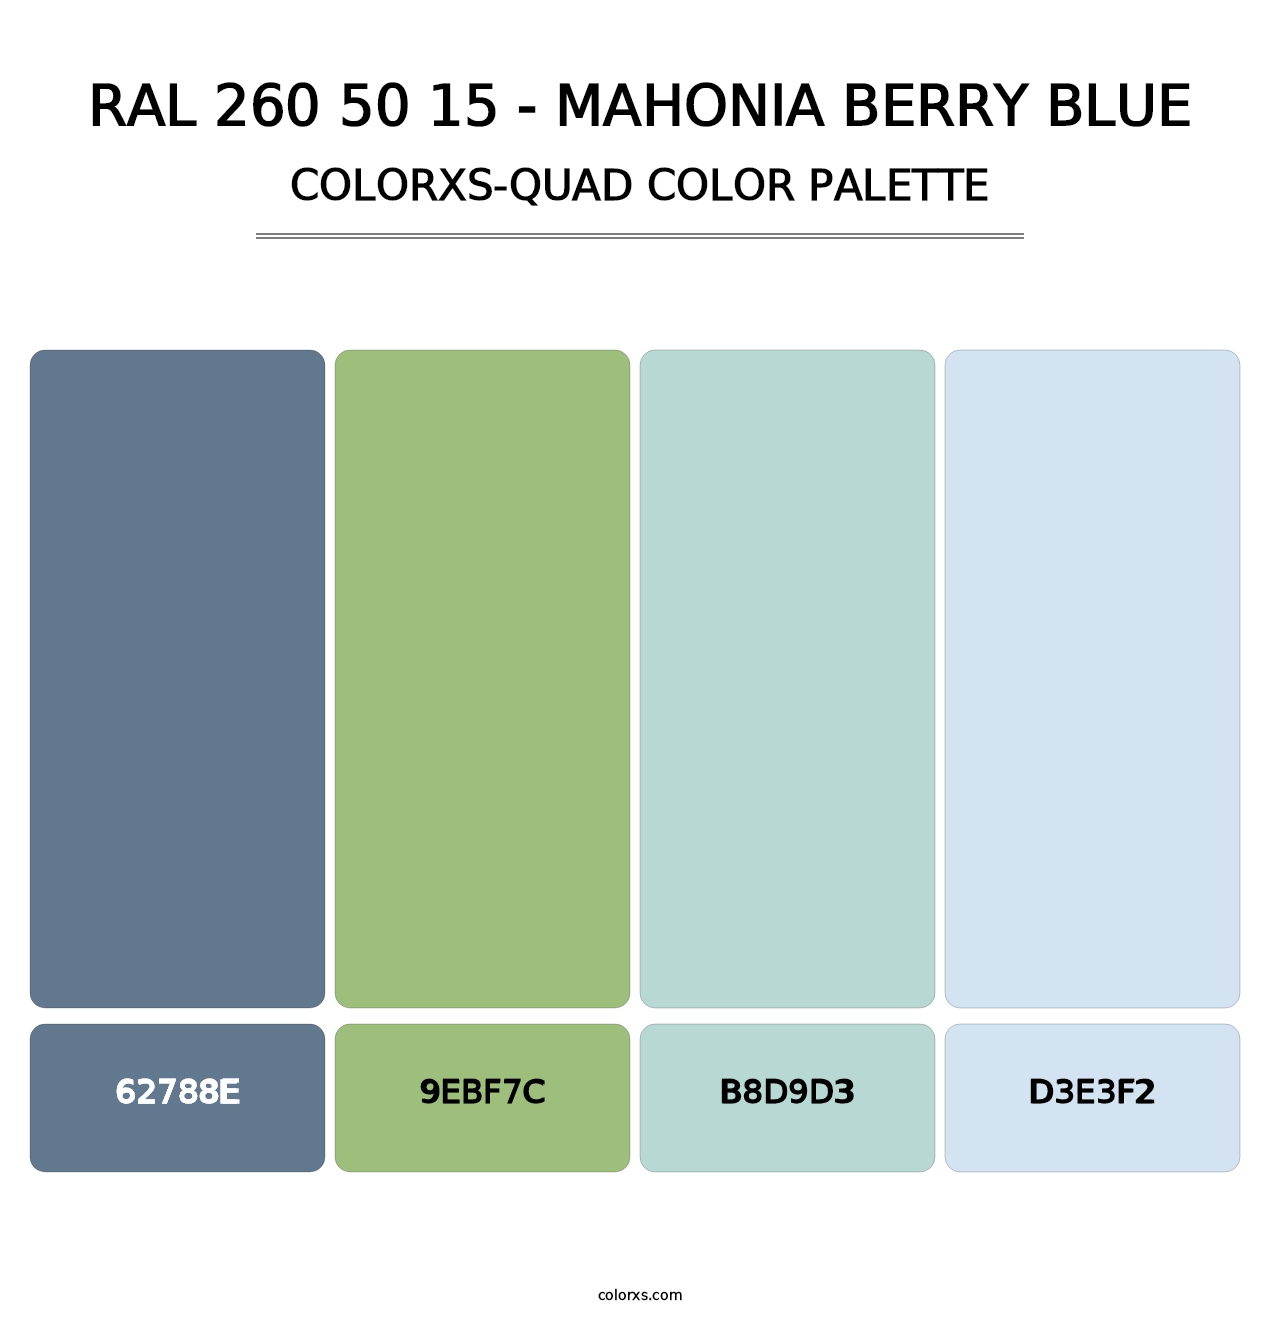 RAL 260 50 15 - Mahonia Berry Blue - Colorxs Quad Palette